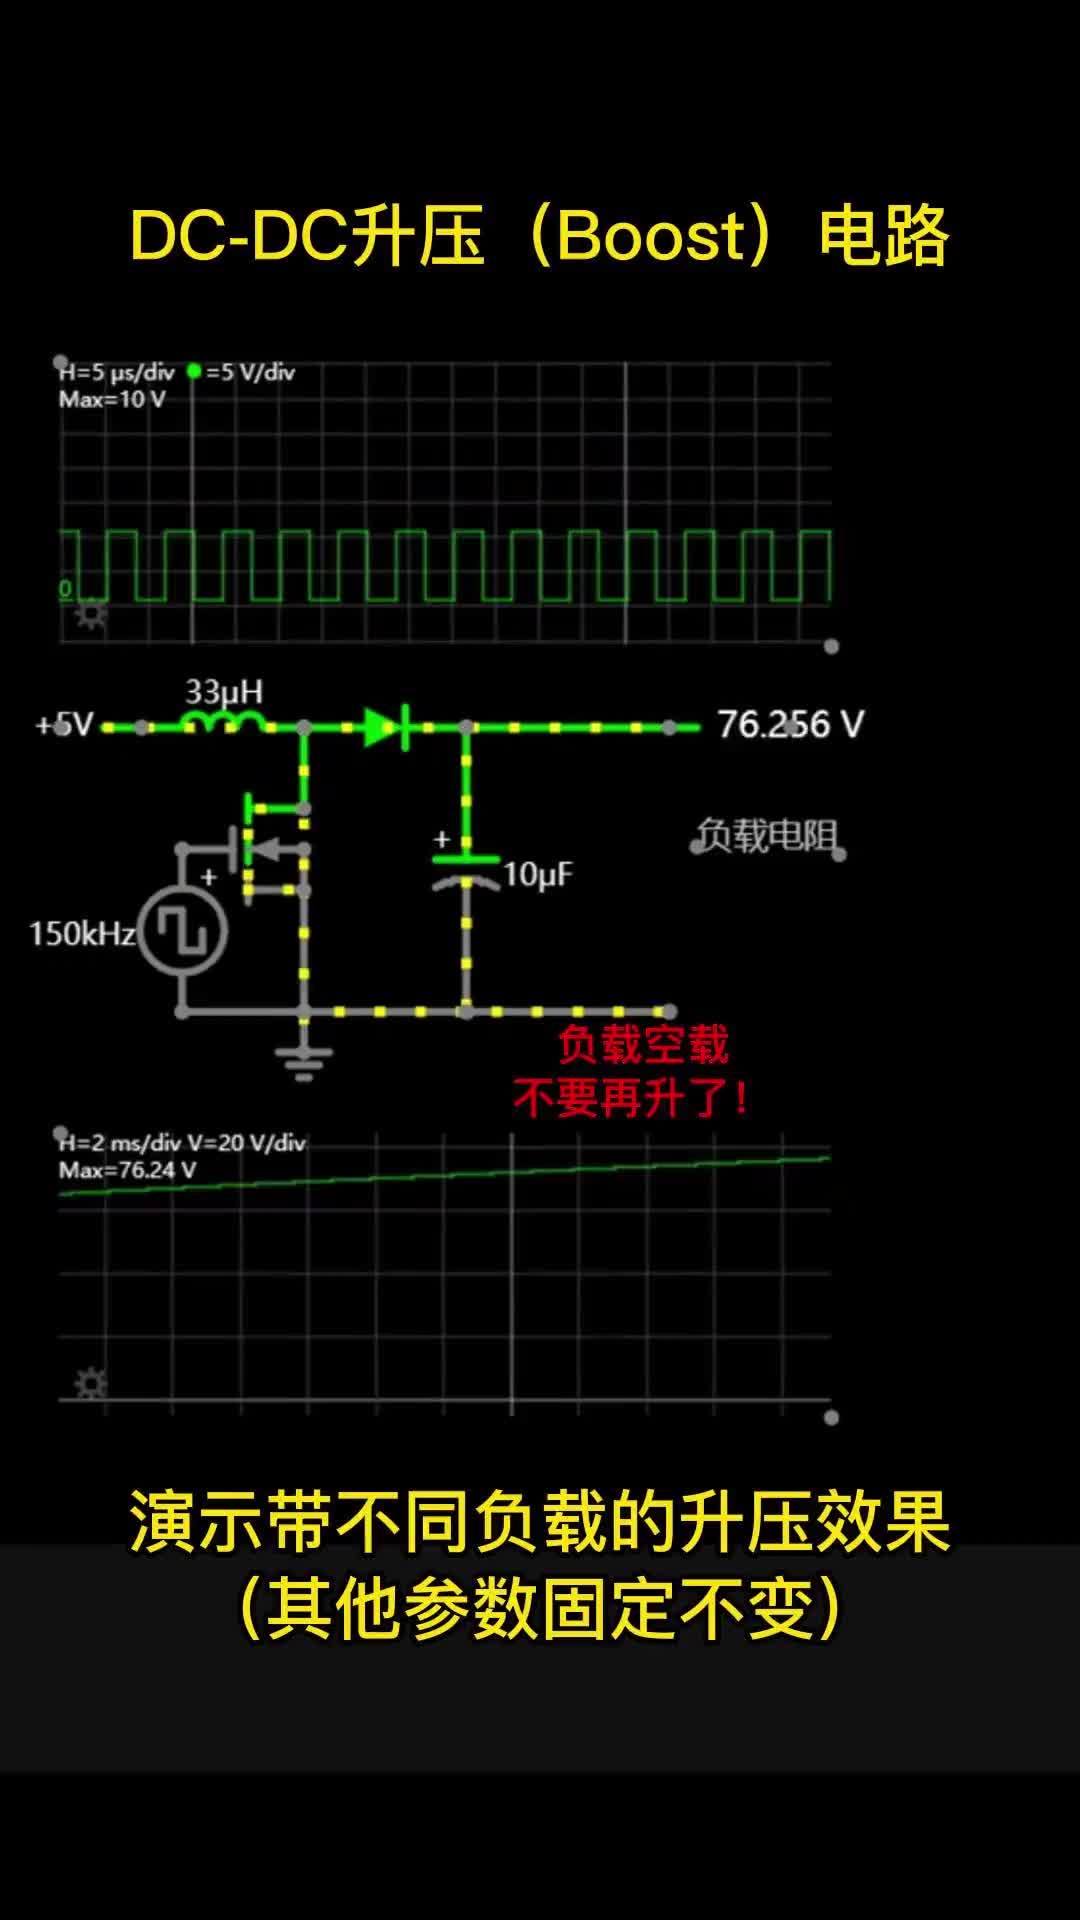 00006 DC-DC升压(Boost)电路，演示带不同负载的升压效果（其他参数固定不变